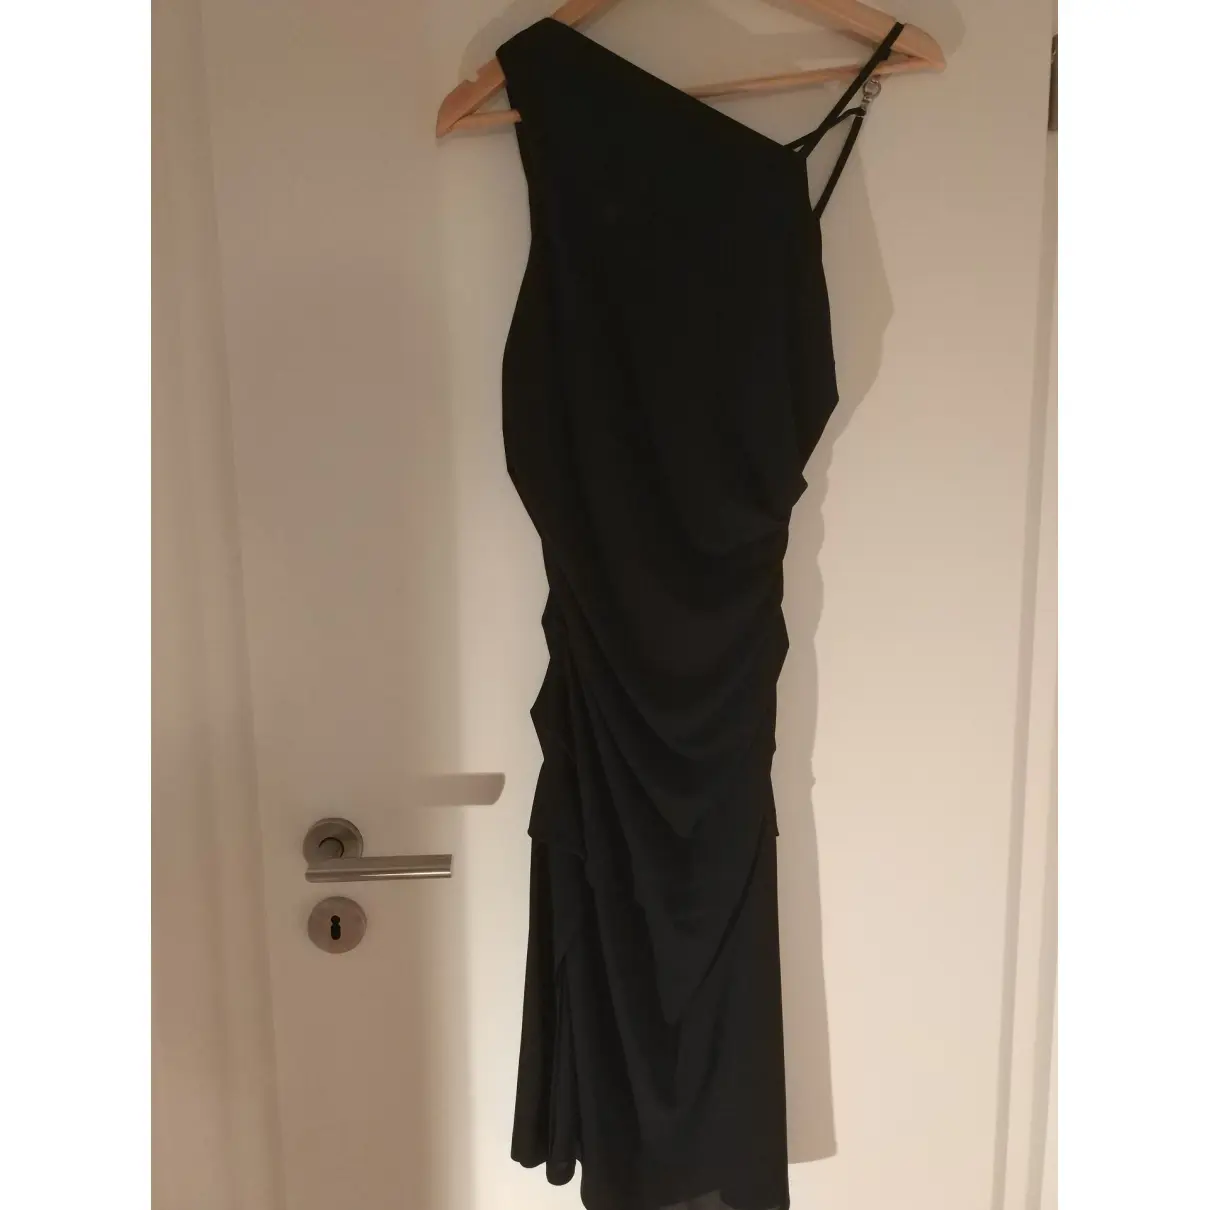 Versus Mid-length dress for sale